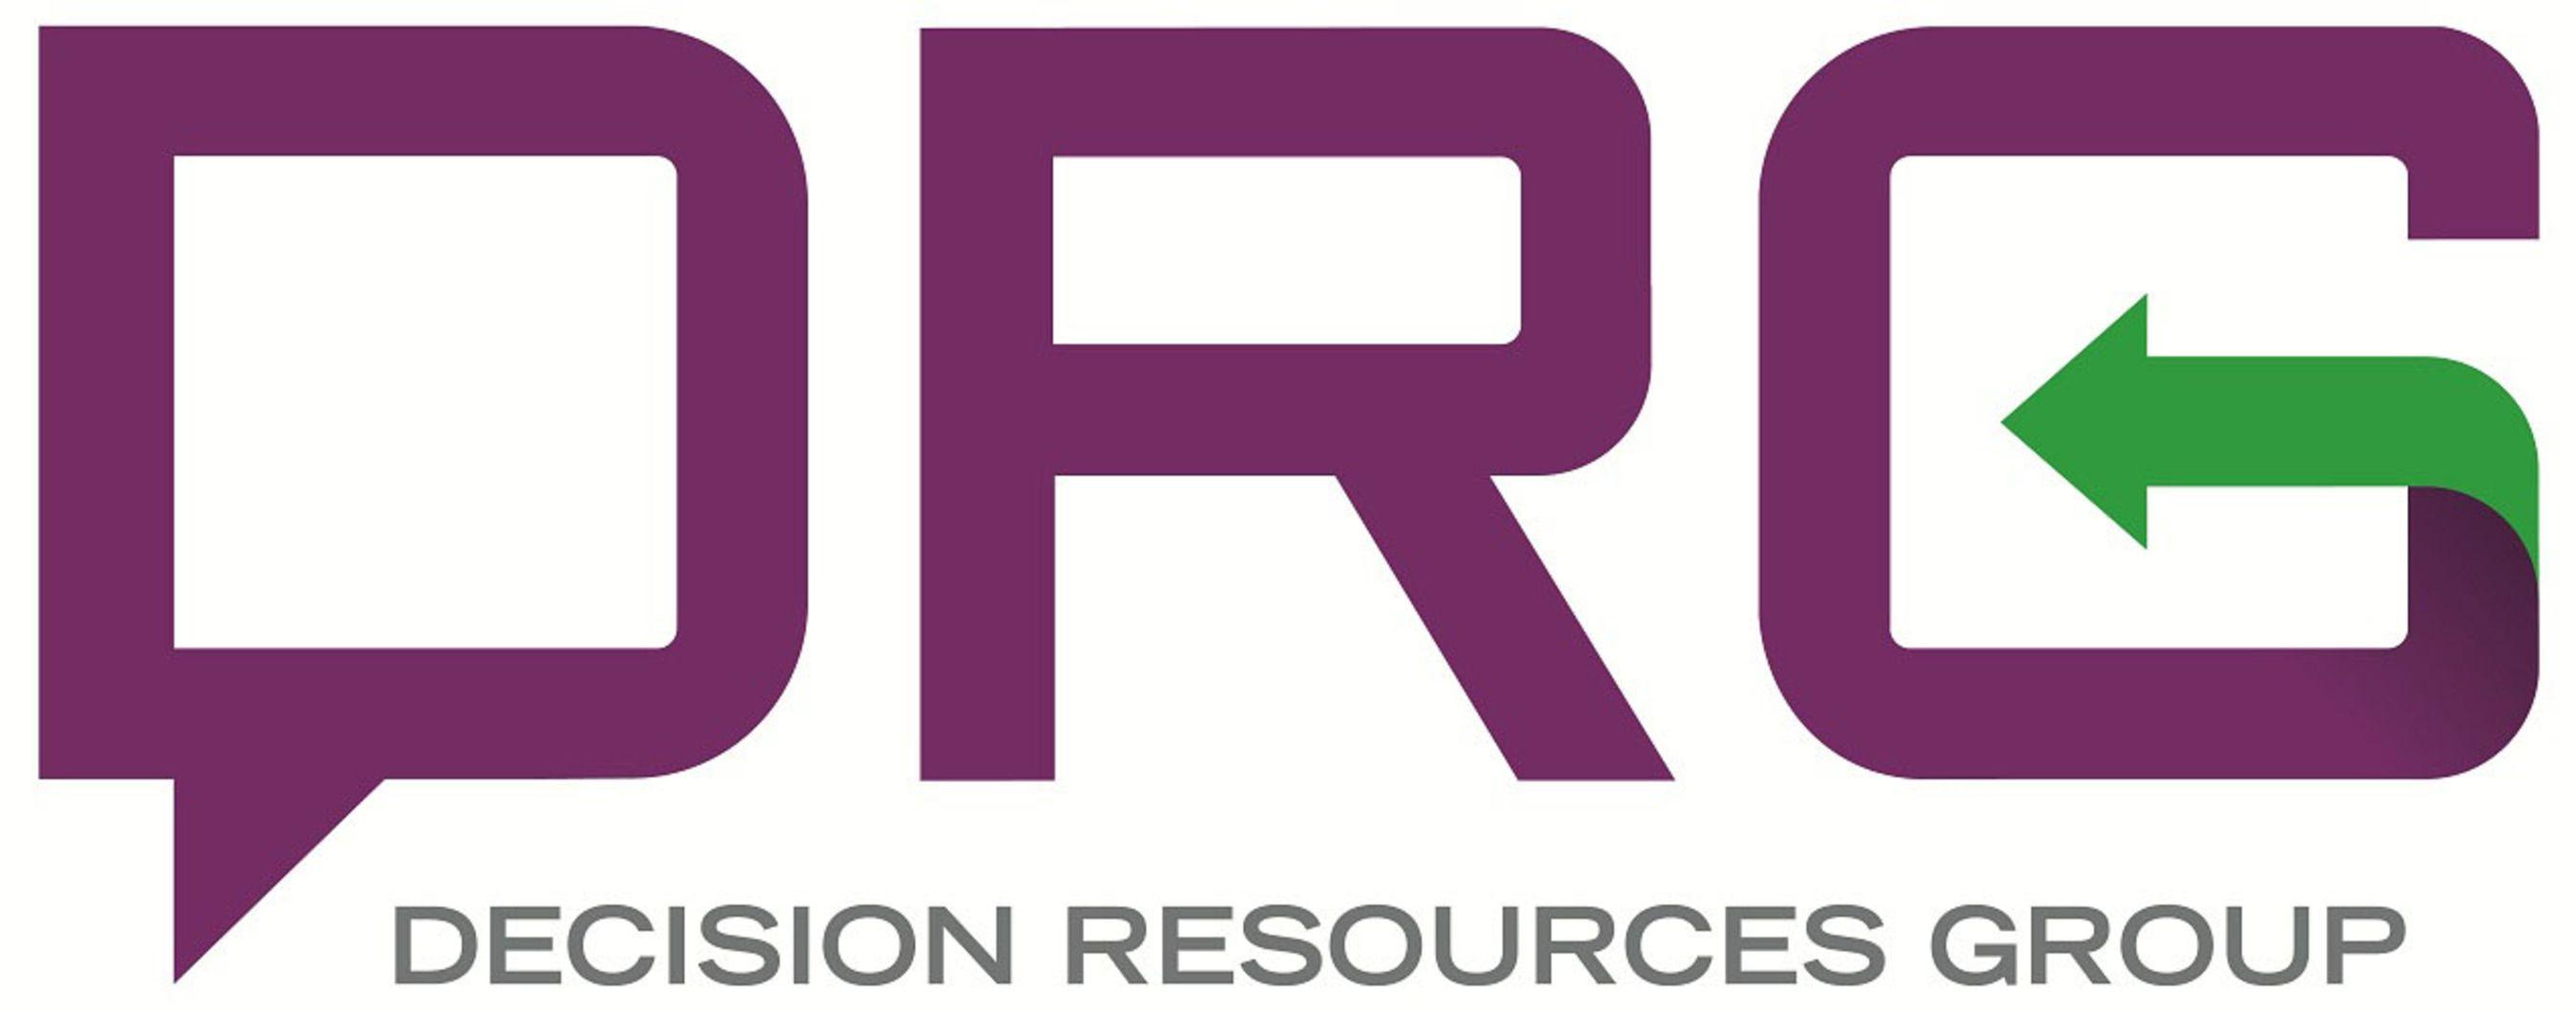 DRG Logo - Decision Resources Group Unifies Portfolio Under DRG Brand